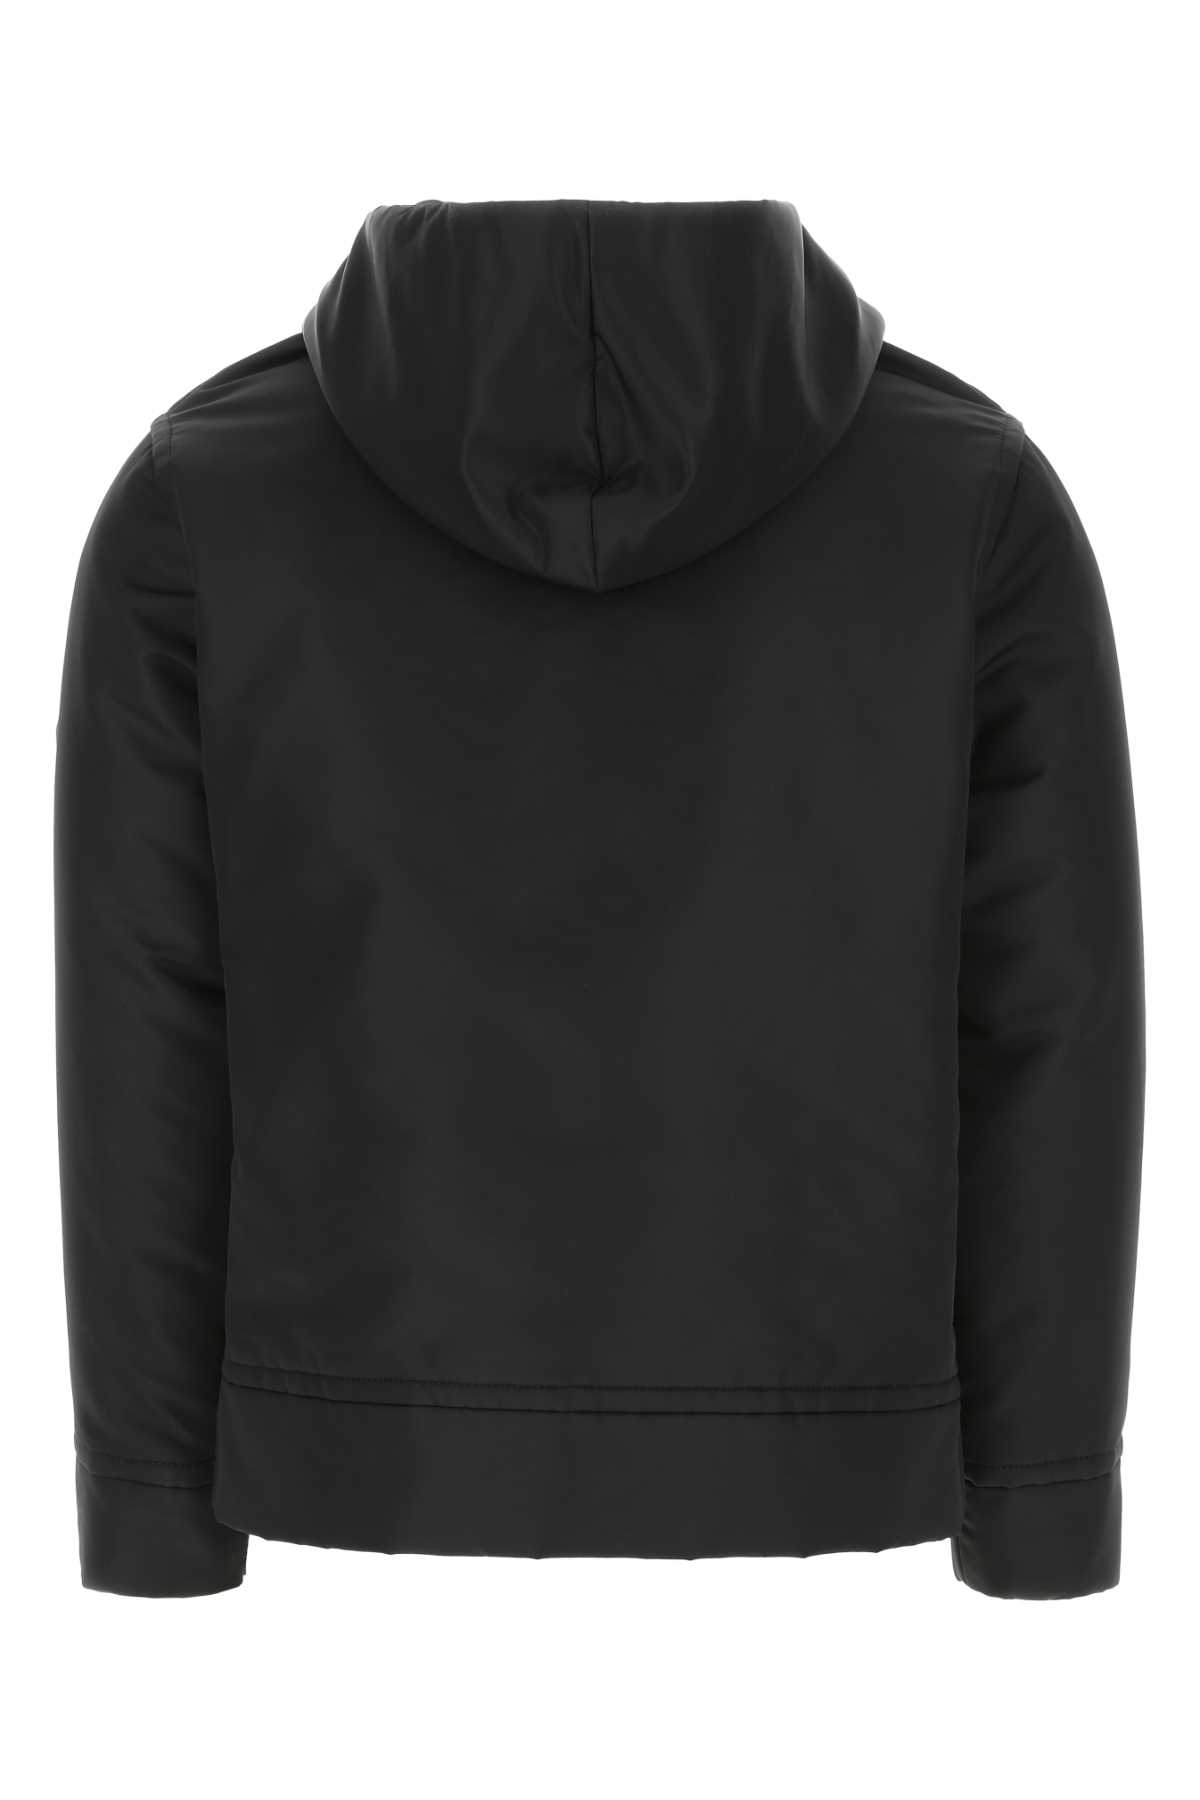 Valentino Black Nylon Sweatshirt In 0no